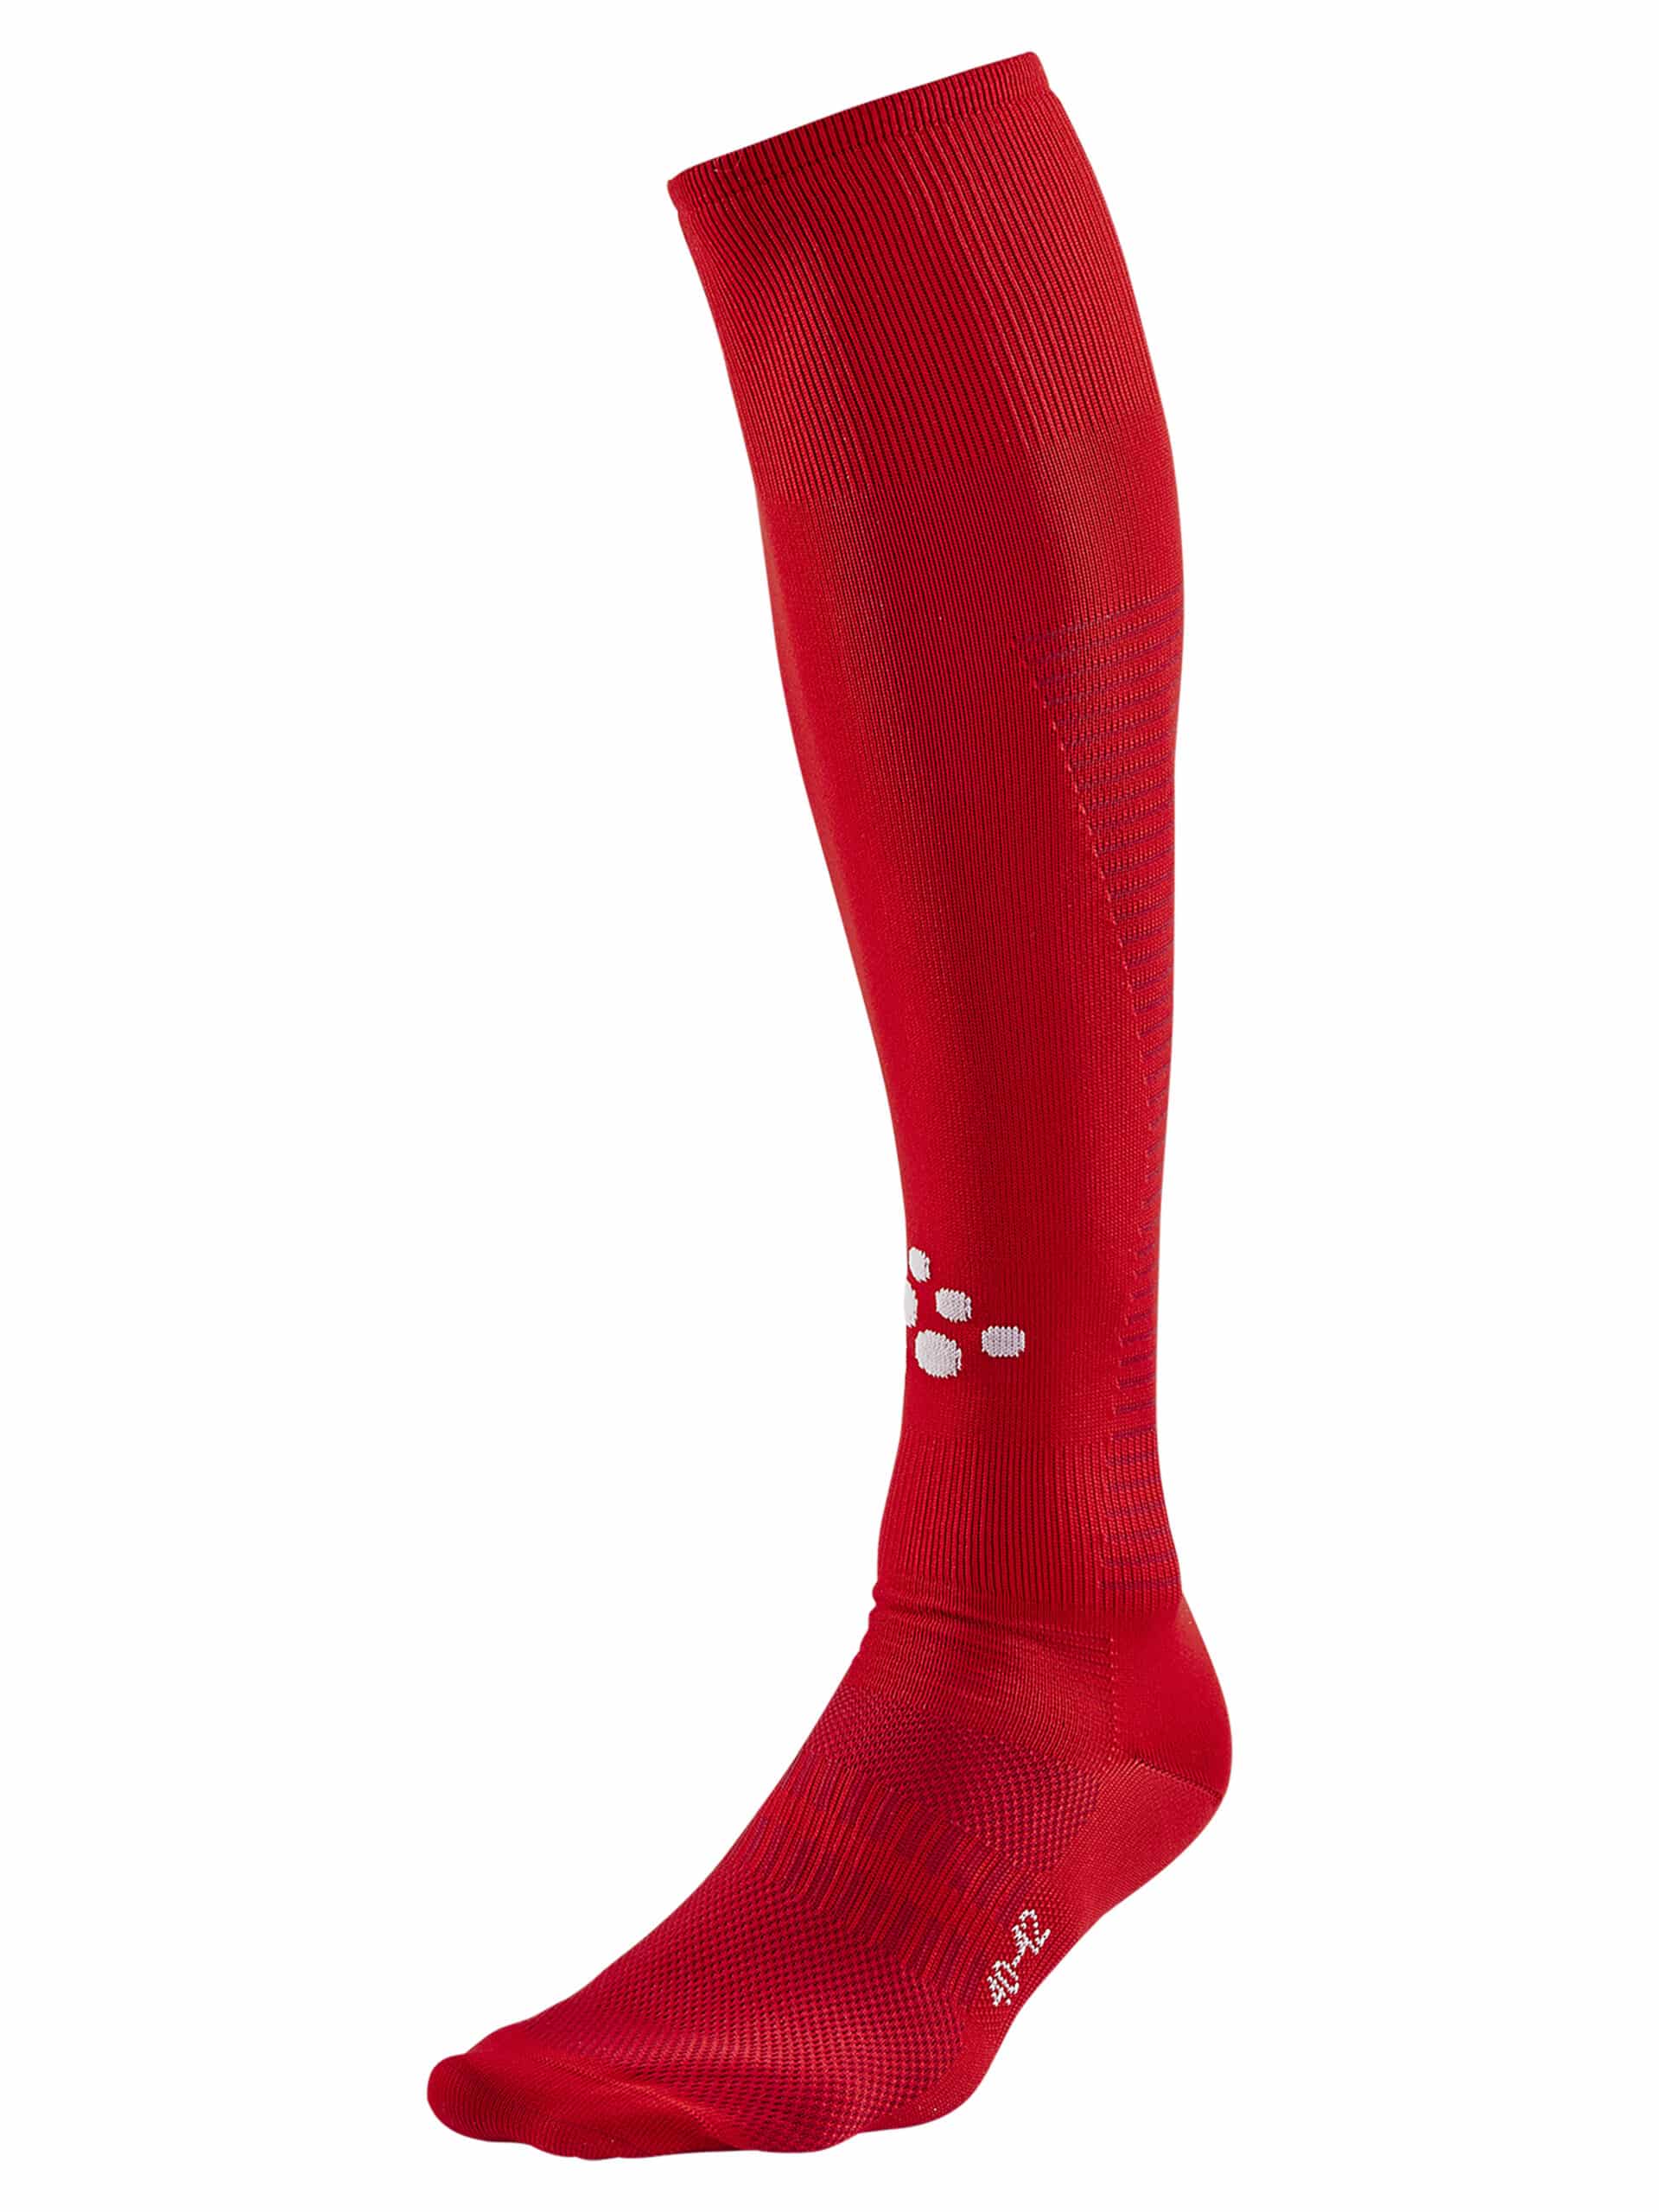 Craft - Pro Control Socks - Bright Red 46/48